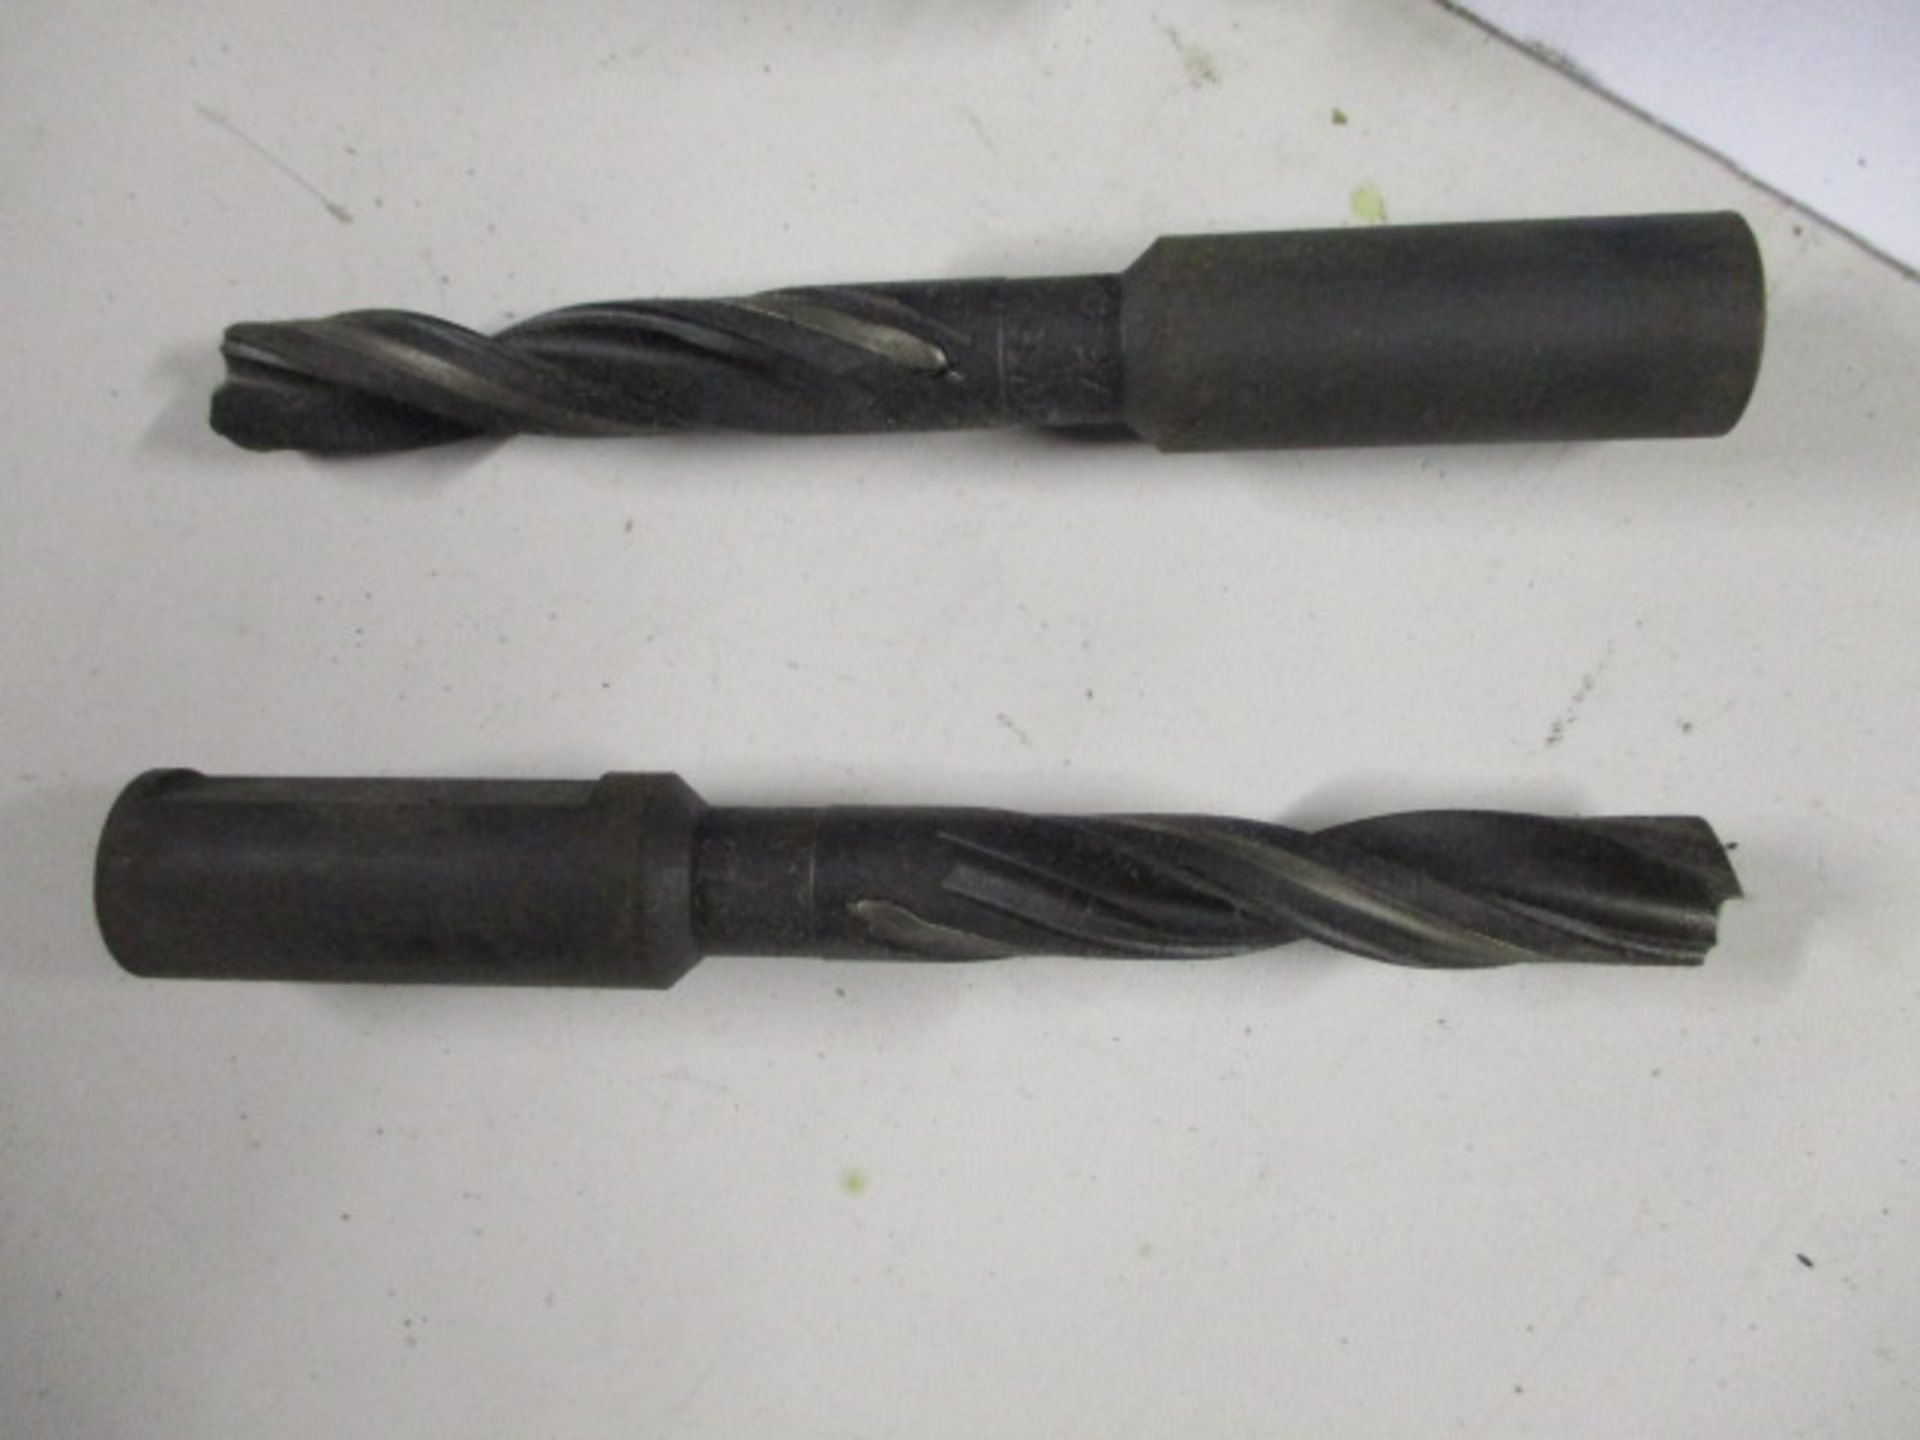 HSS Straight Shank Oil Feed Chipbreaker Drills (Unused) - Image 3 of 3